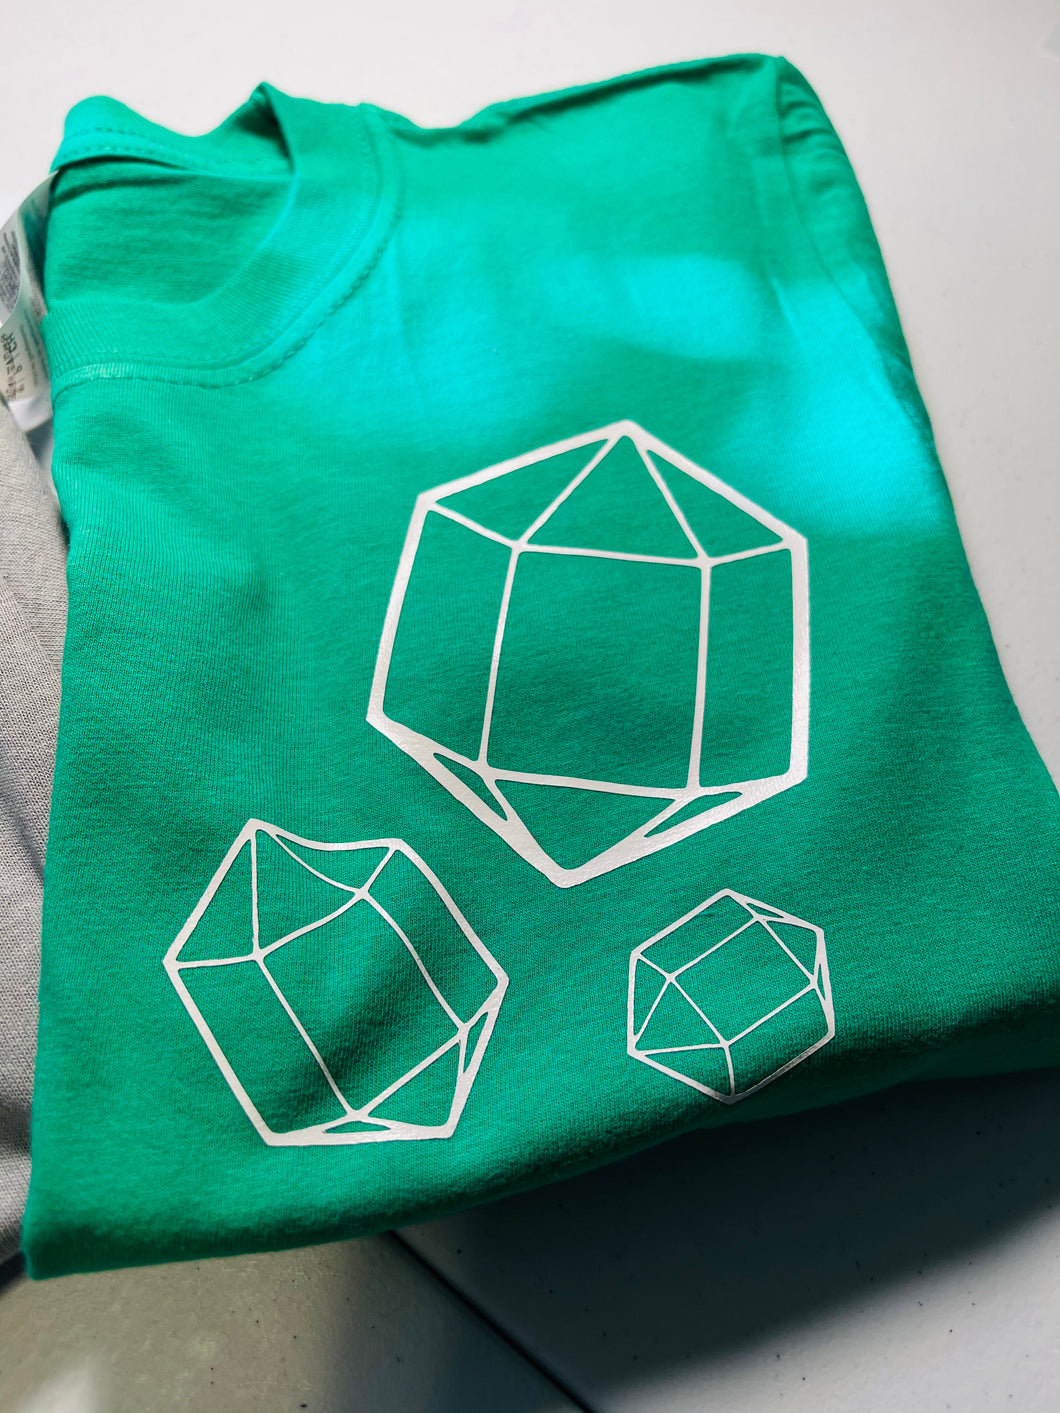 Green & White “Crystal edition” AOTO shirt